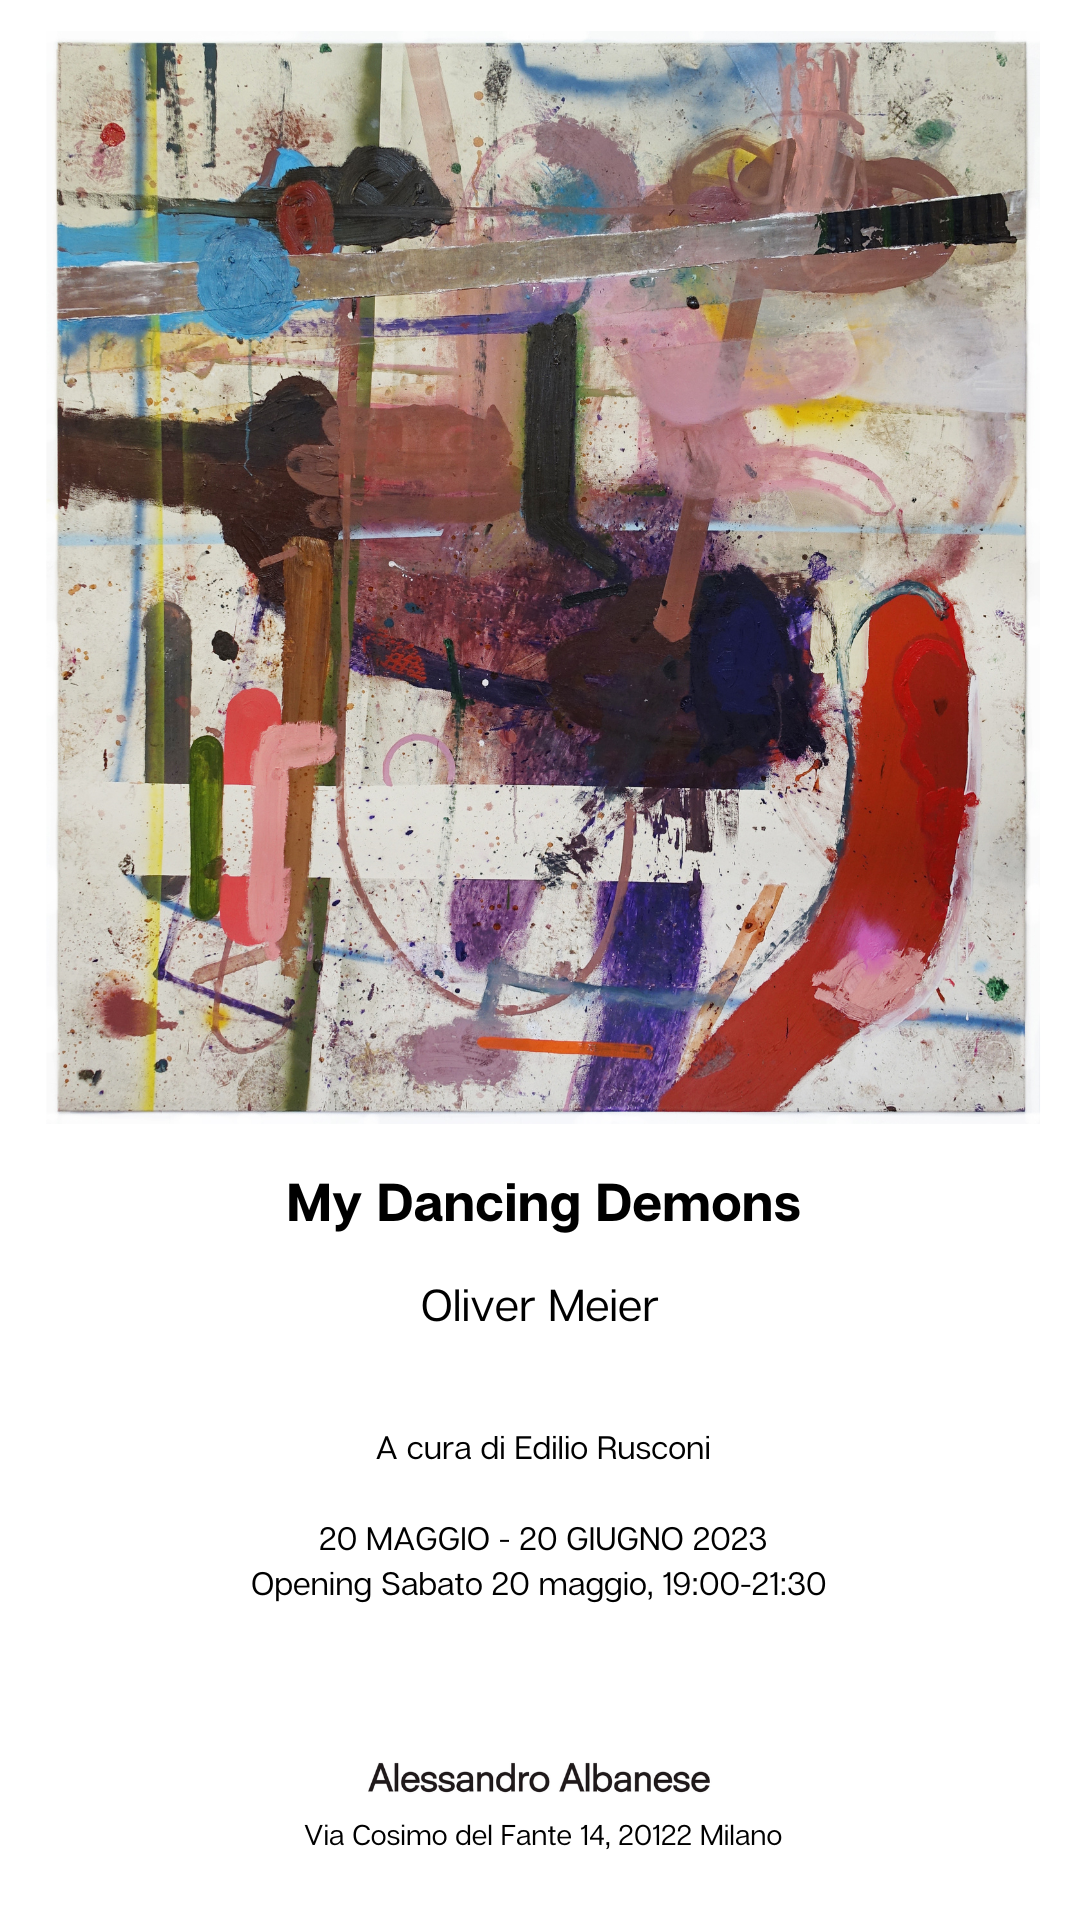 Oliver Meier - My Dancing Demons